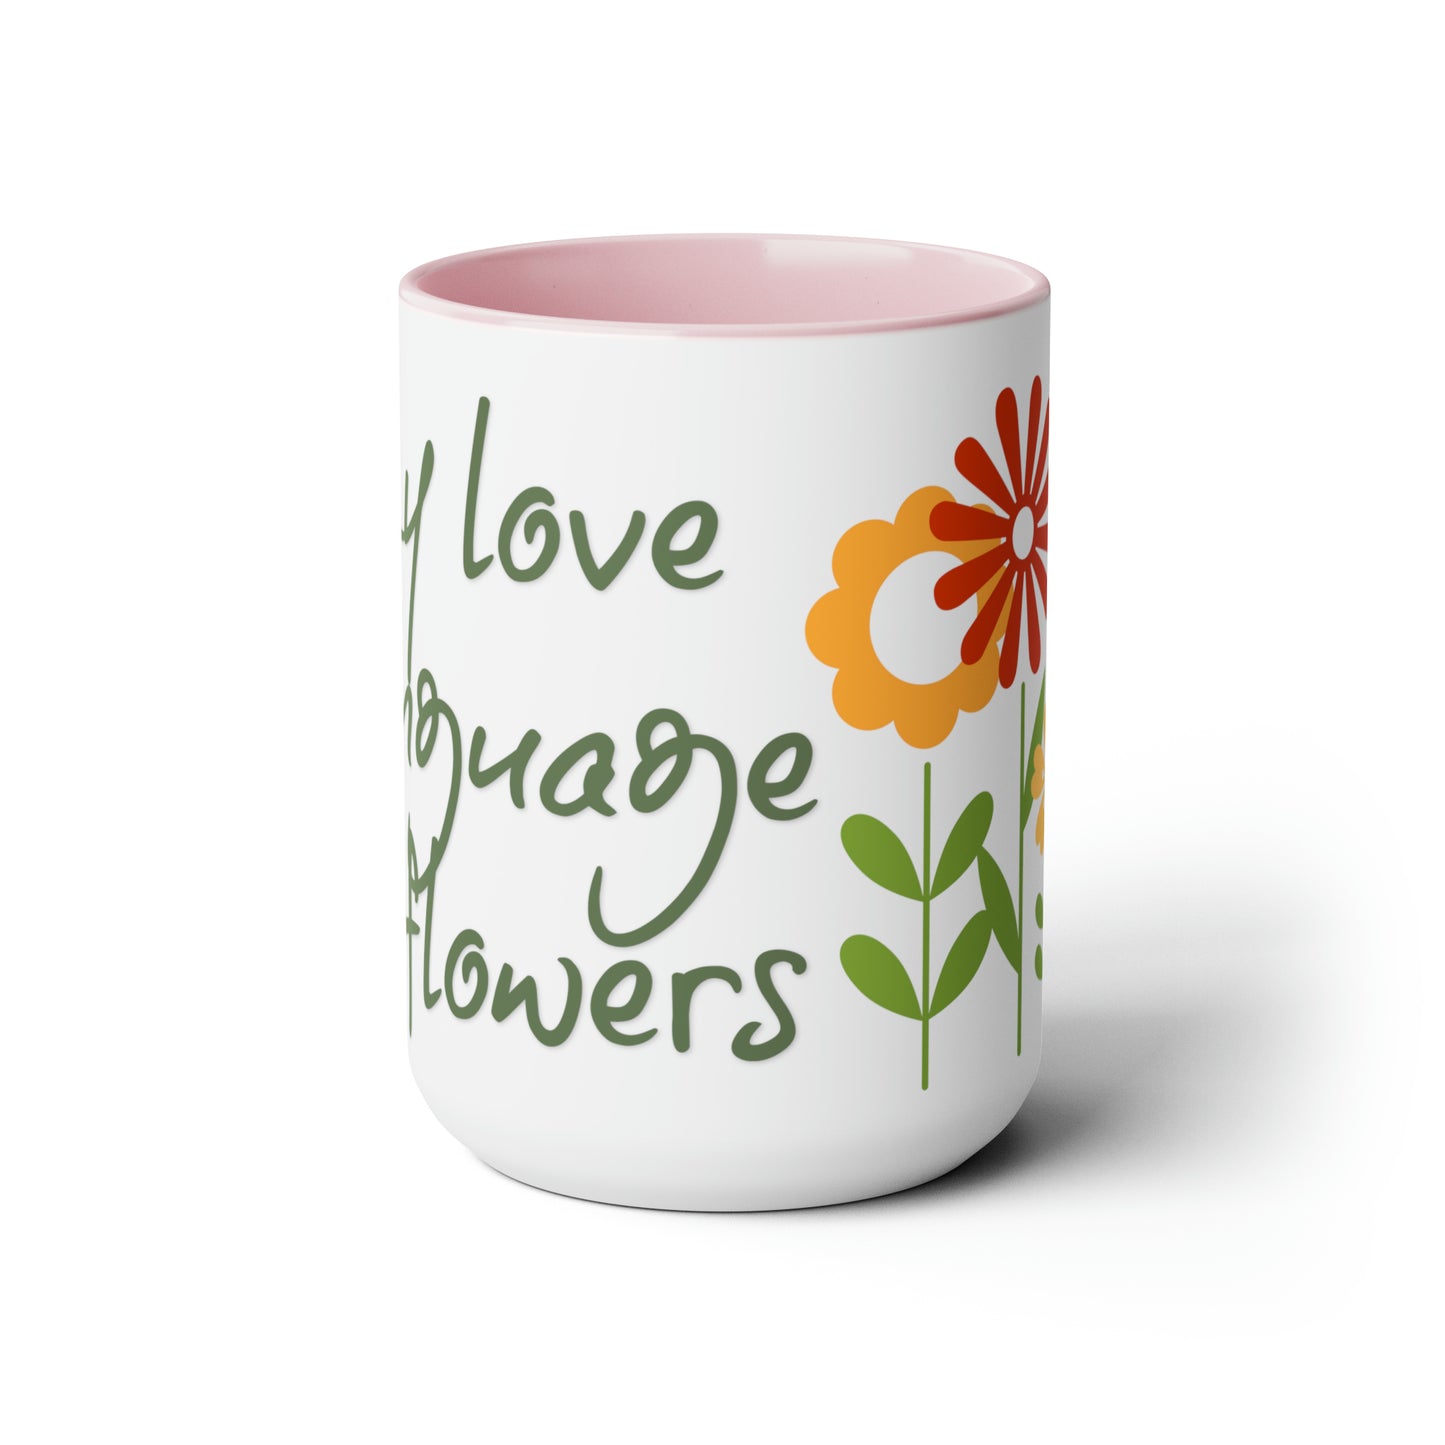 my love language is flowers - 15oz graphic mug